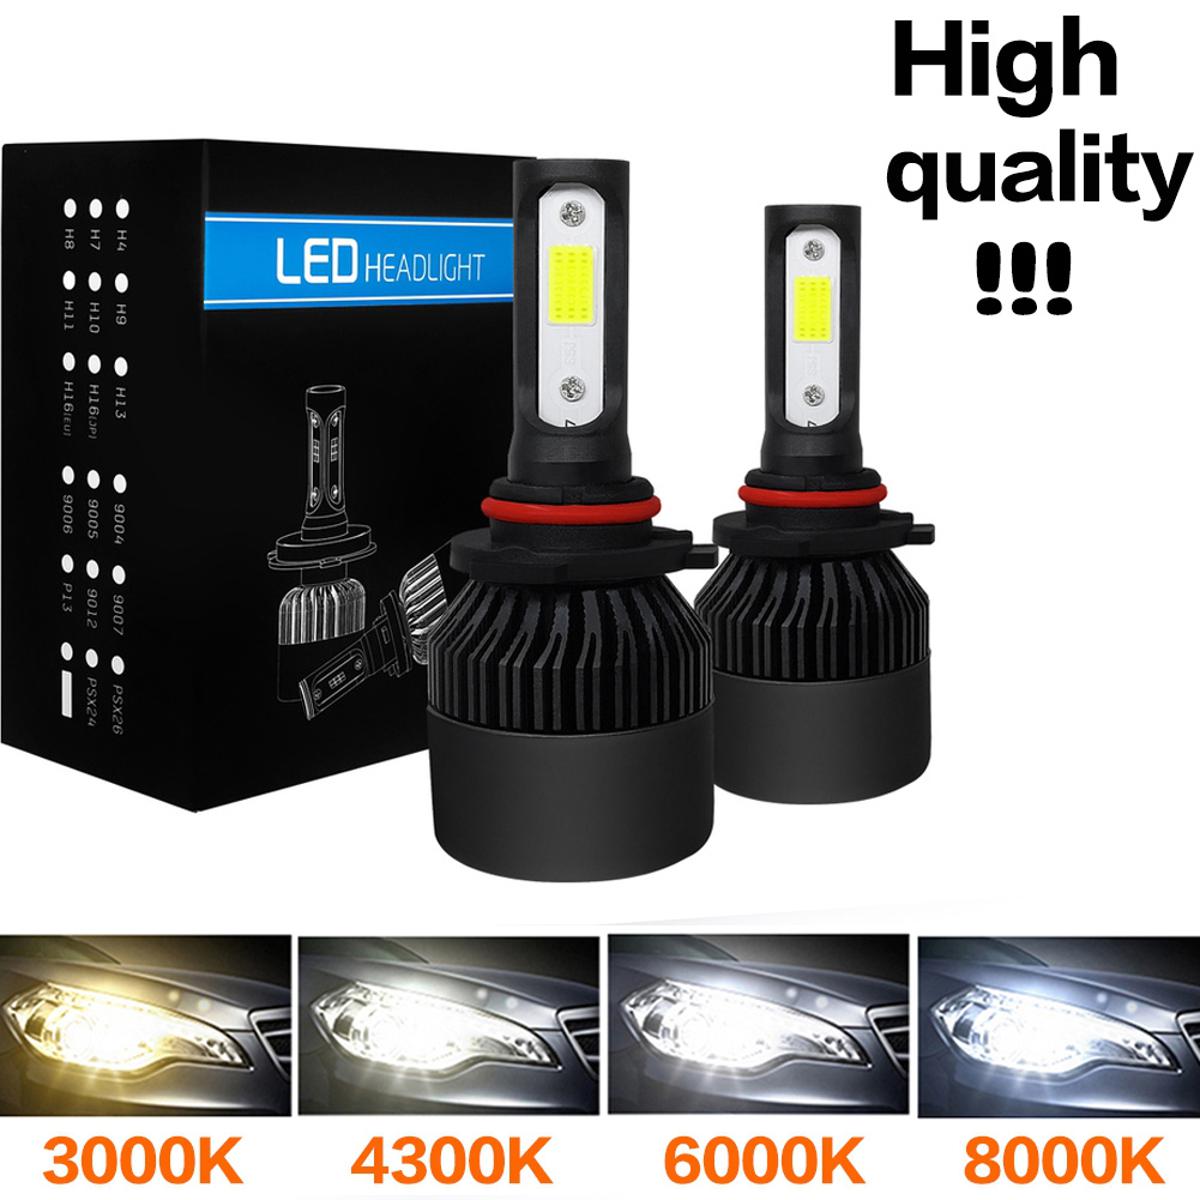 Quality upgrade】1 Pair LED H4 8000K Car Headlight 10000LM Auto LED Headlight